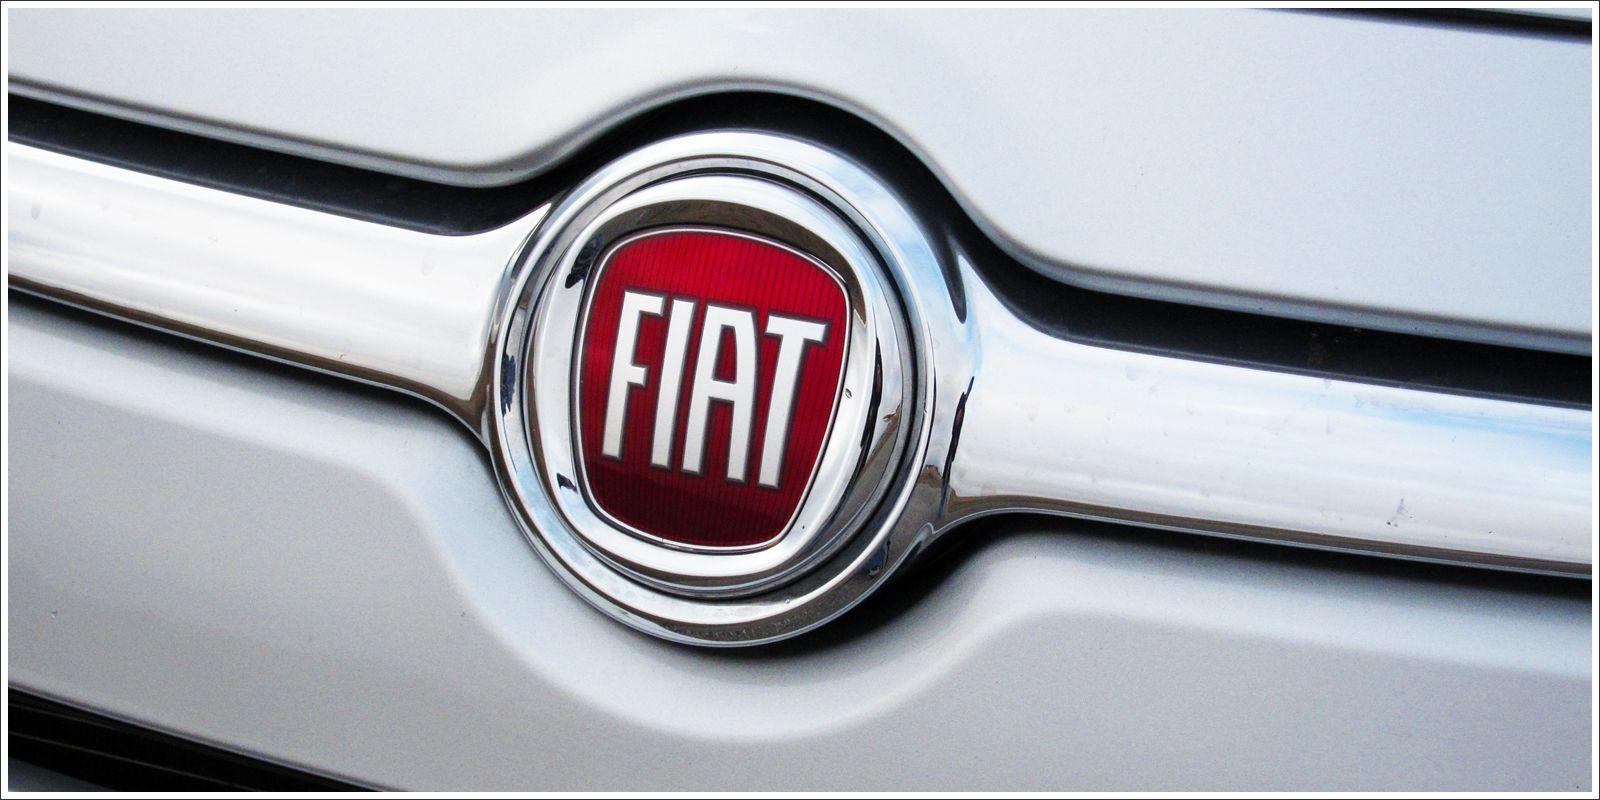 Fiat Automotive Logo - Fiat Logo Meaning and History. Symbol Fiat | World Cars Brands